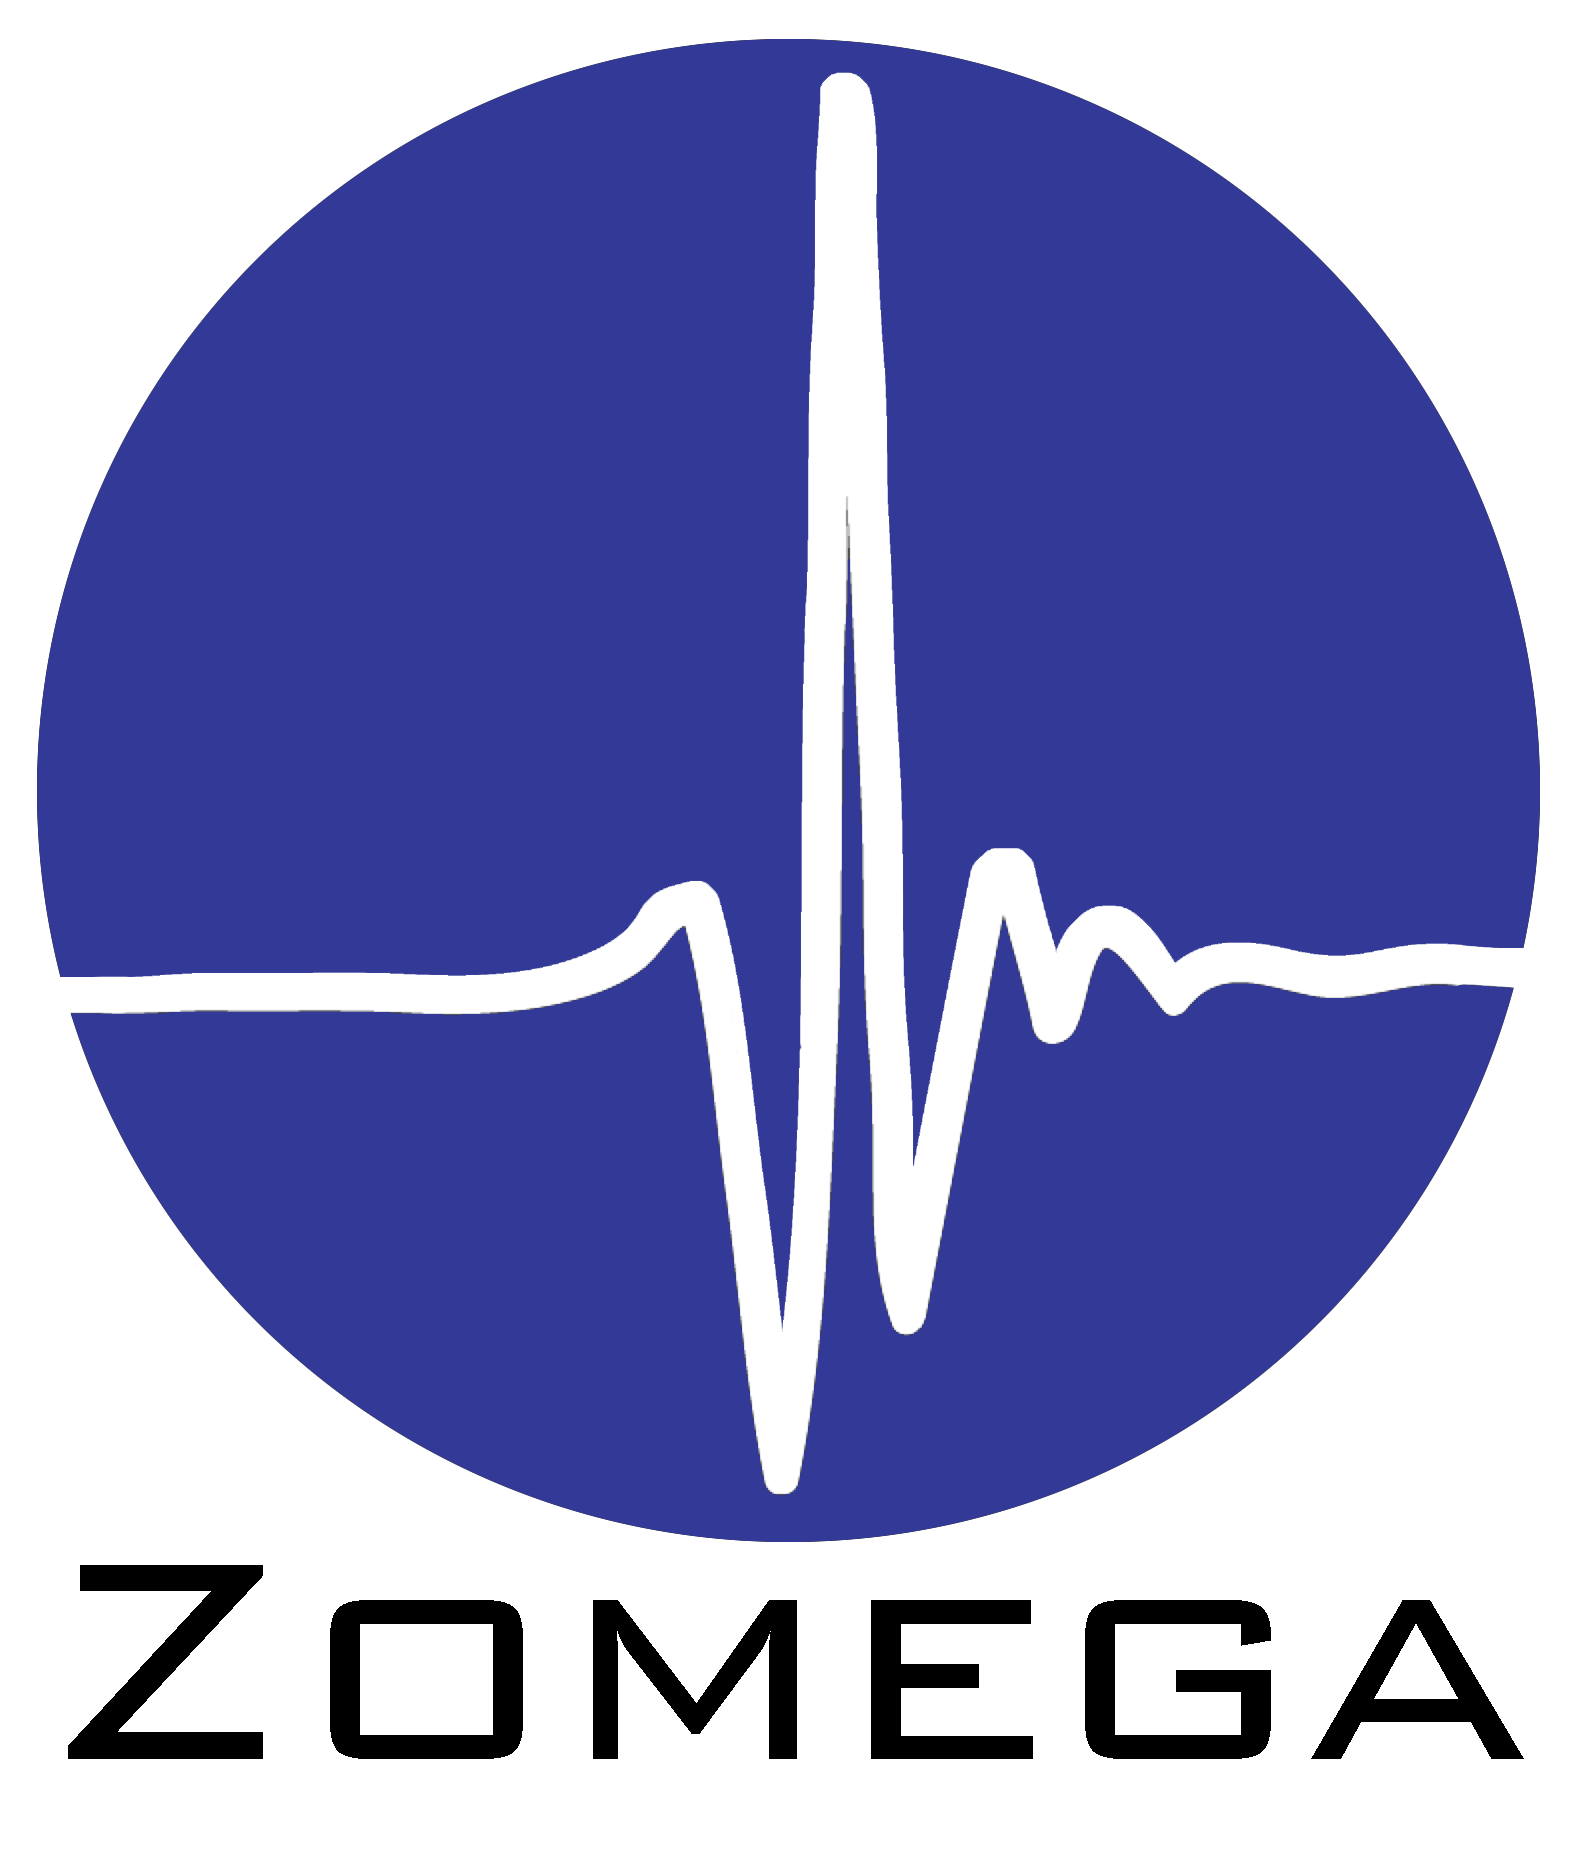 Zomega logo